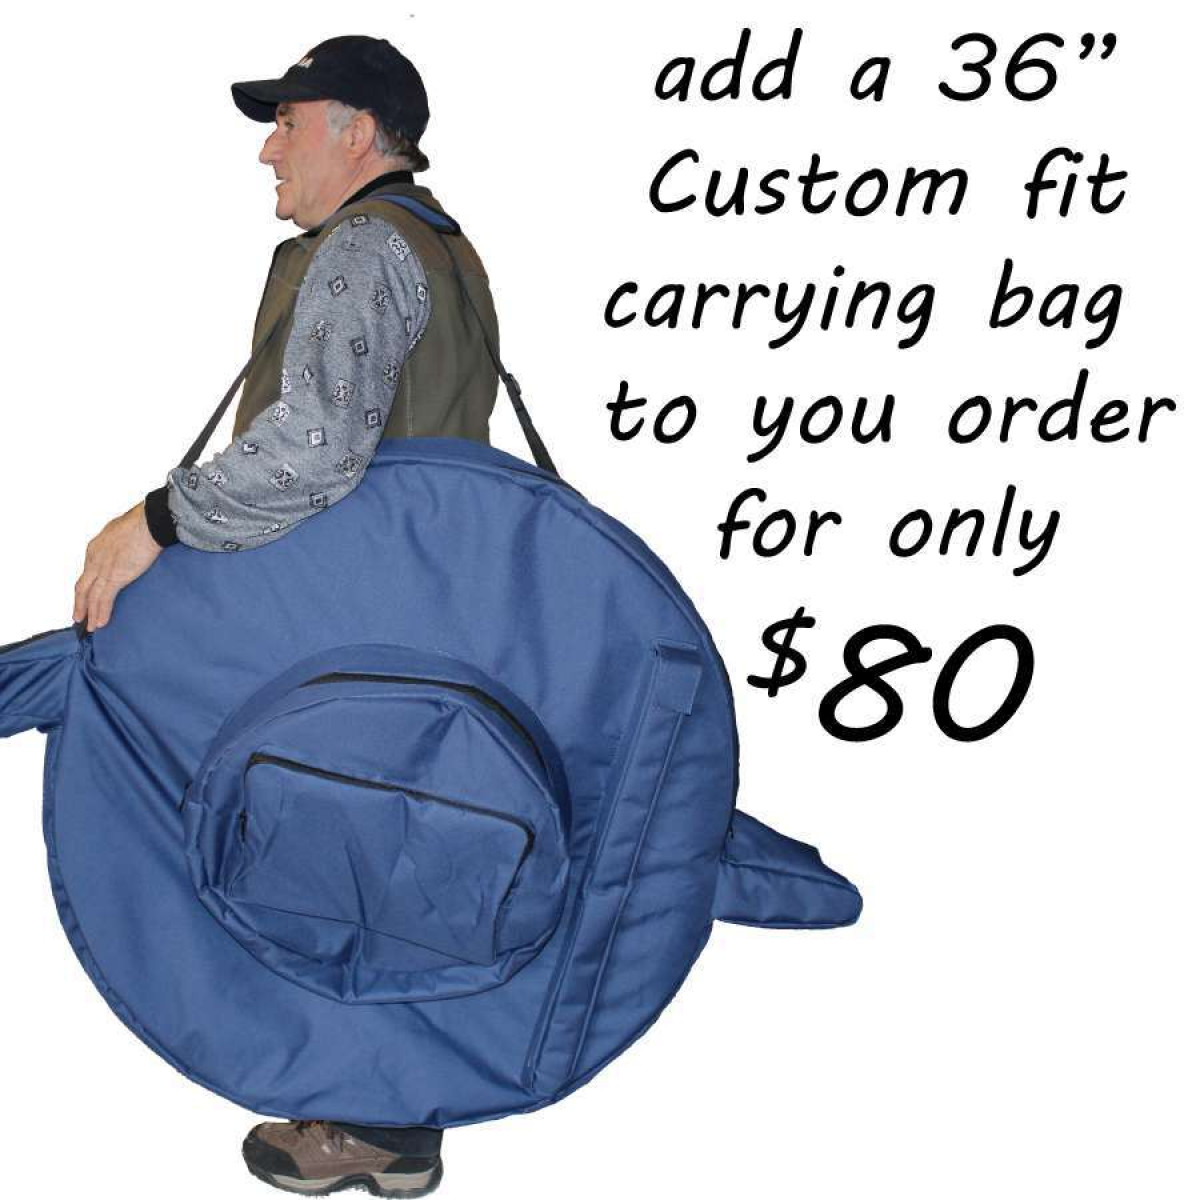 36" Prize Wheel Custom Fit Carrying bag